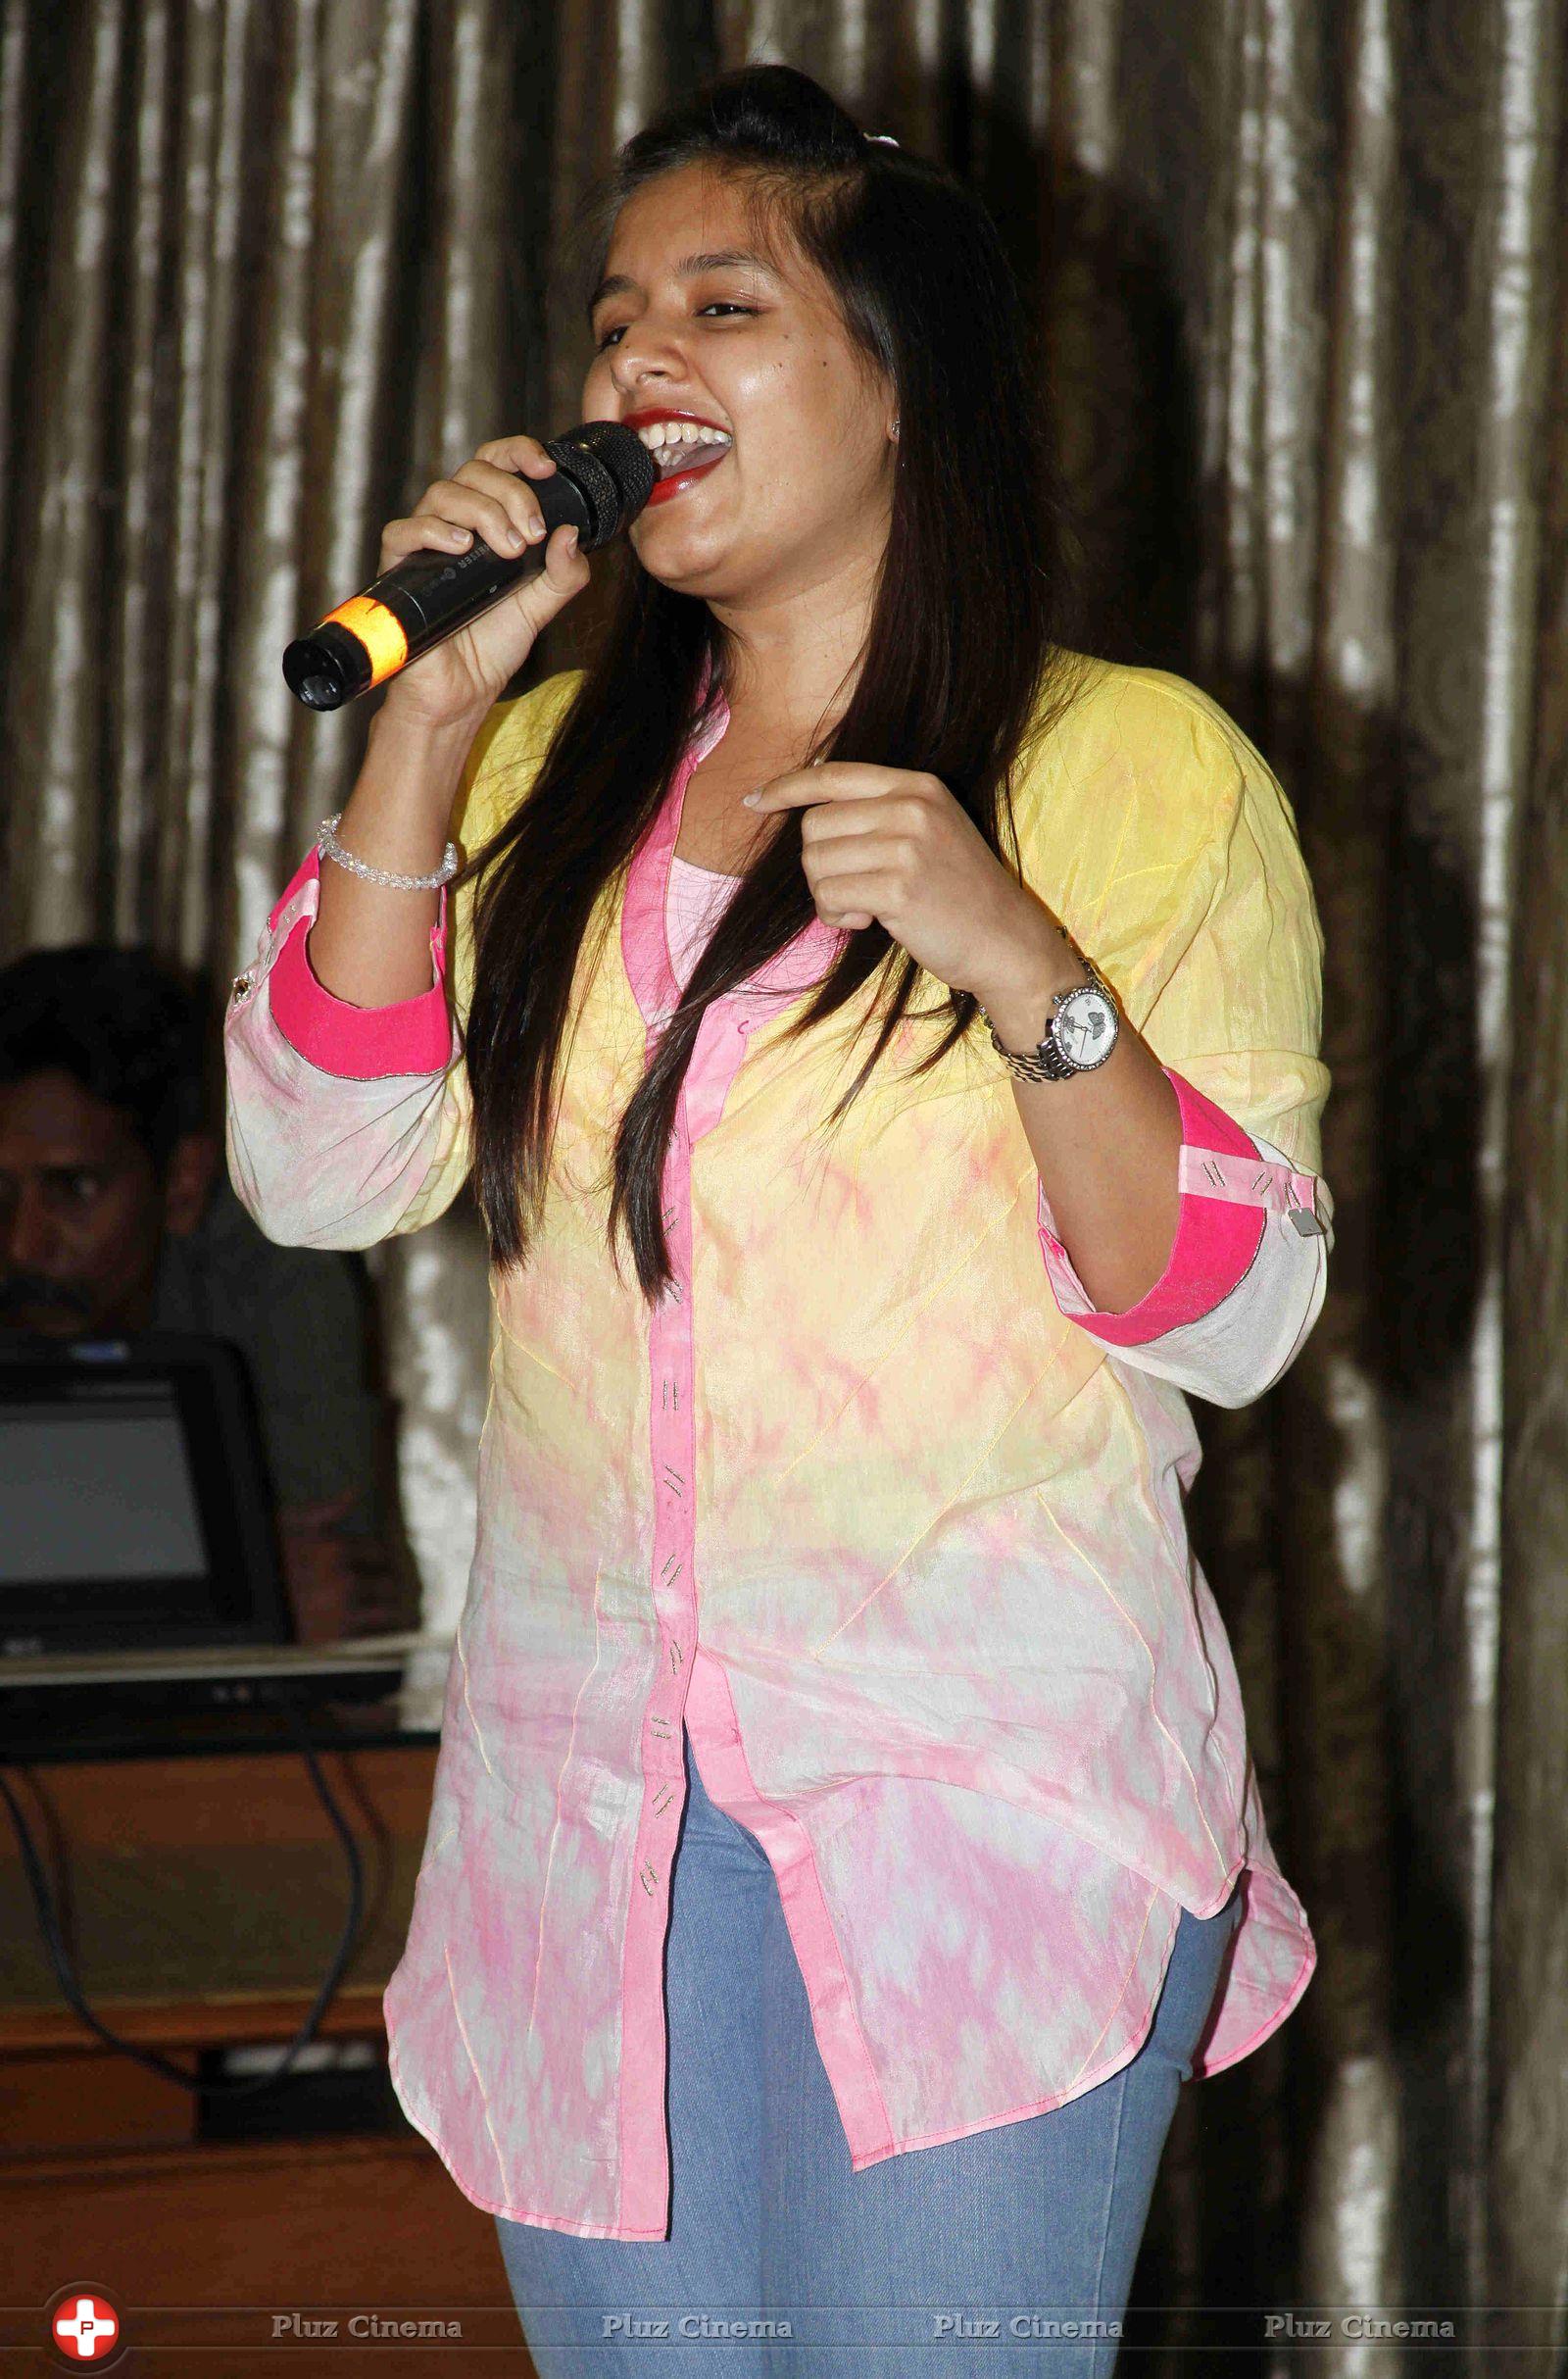 Aishwarya (Singer) - Launch of devotional music album Krisnaruupa Photos | Picture 690515